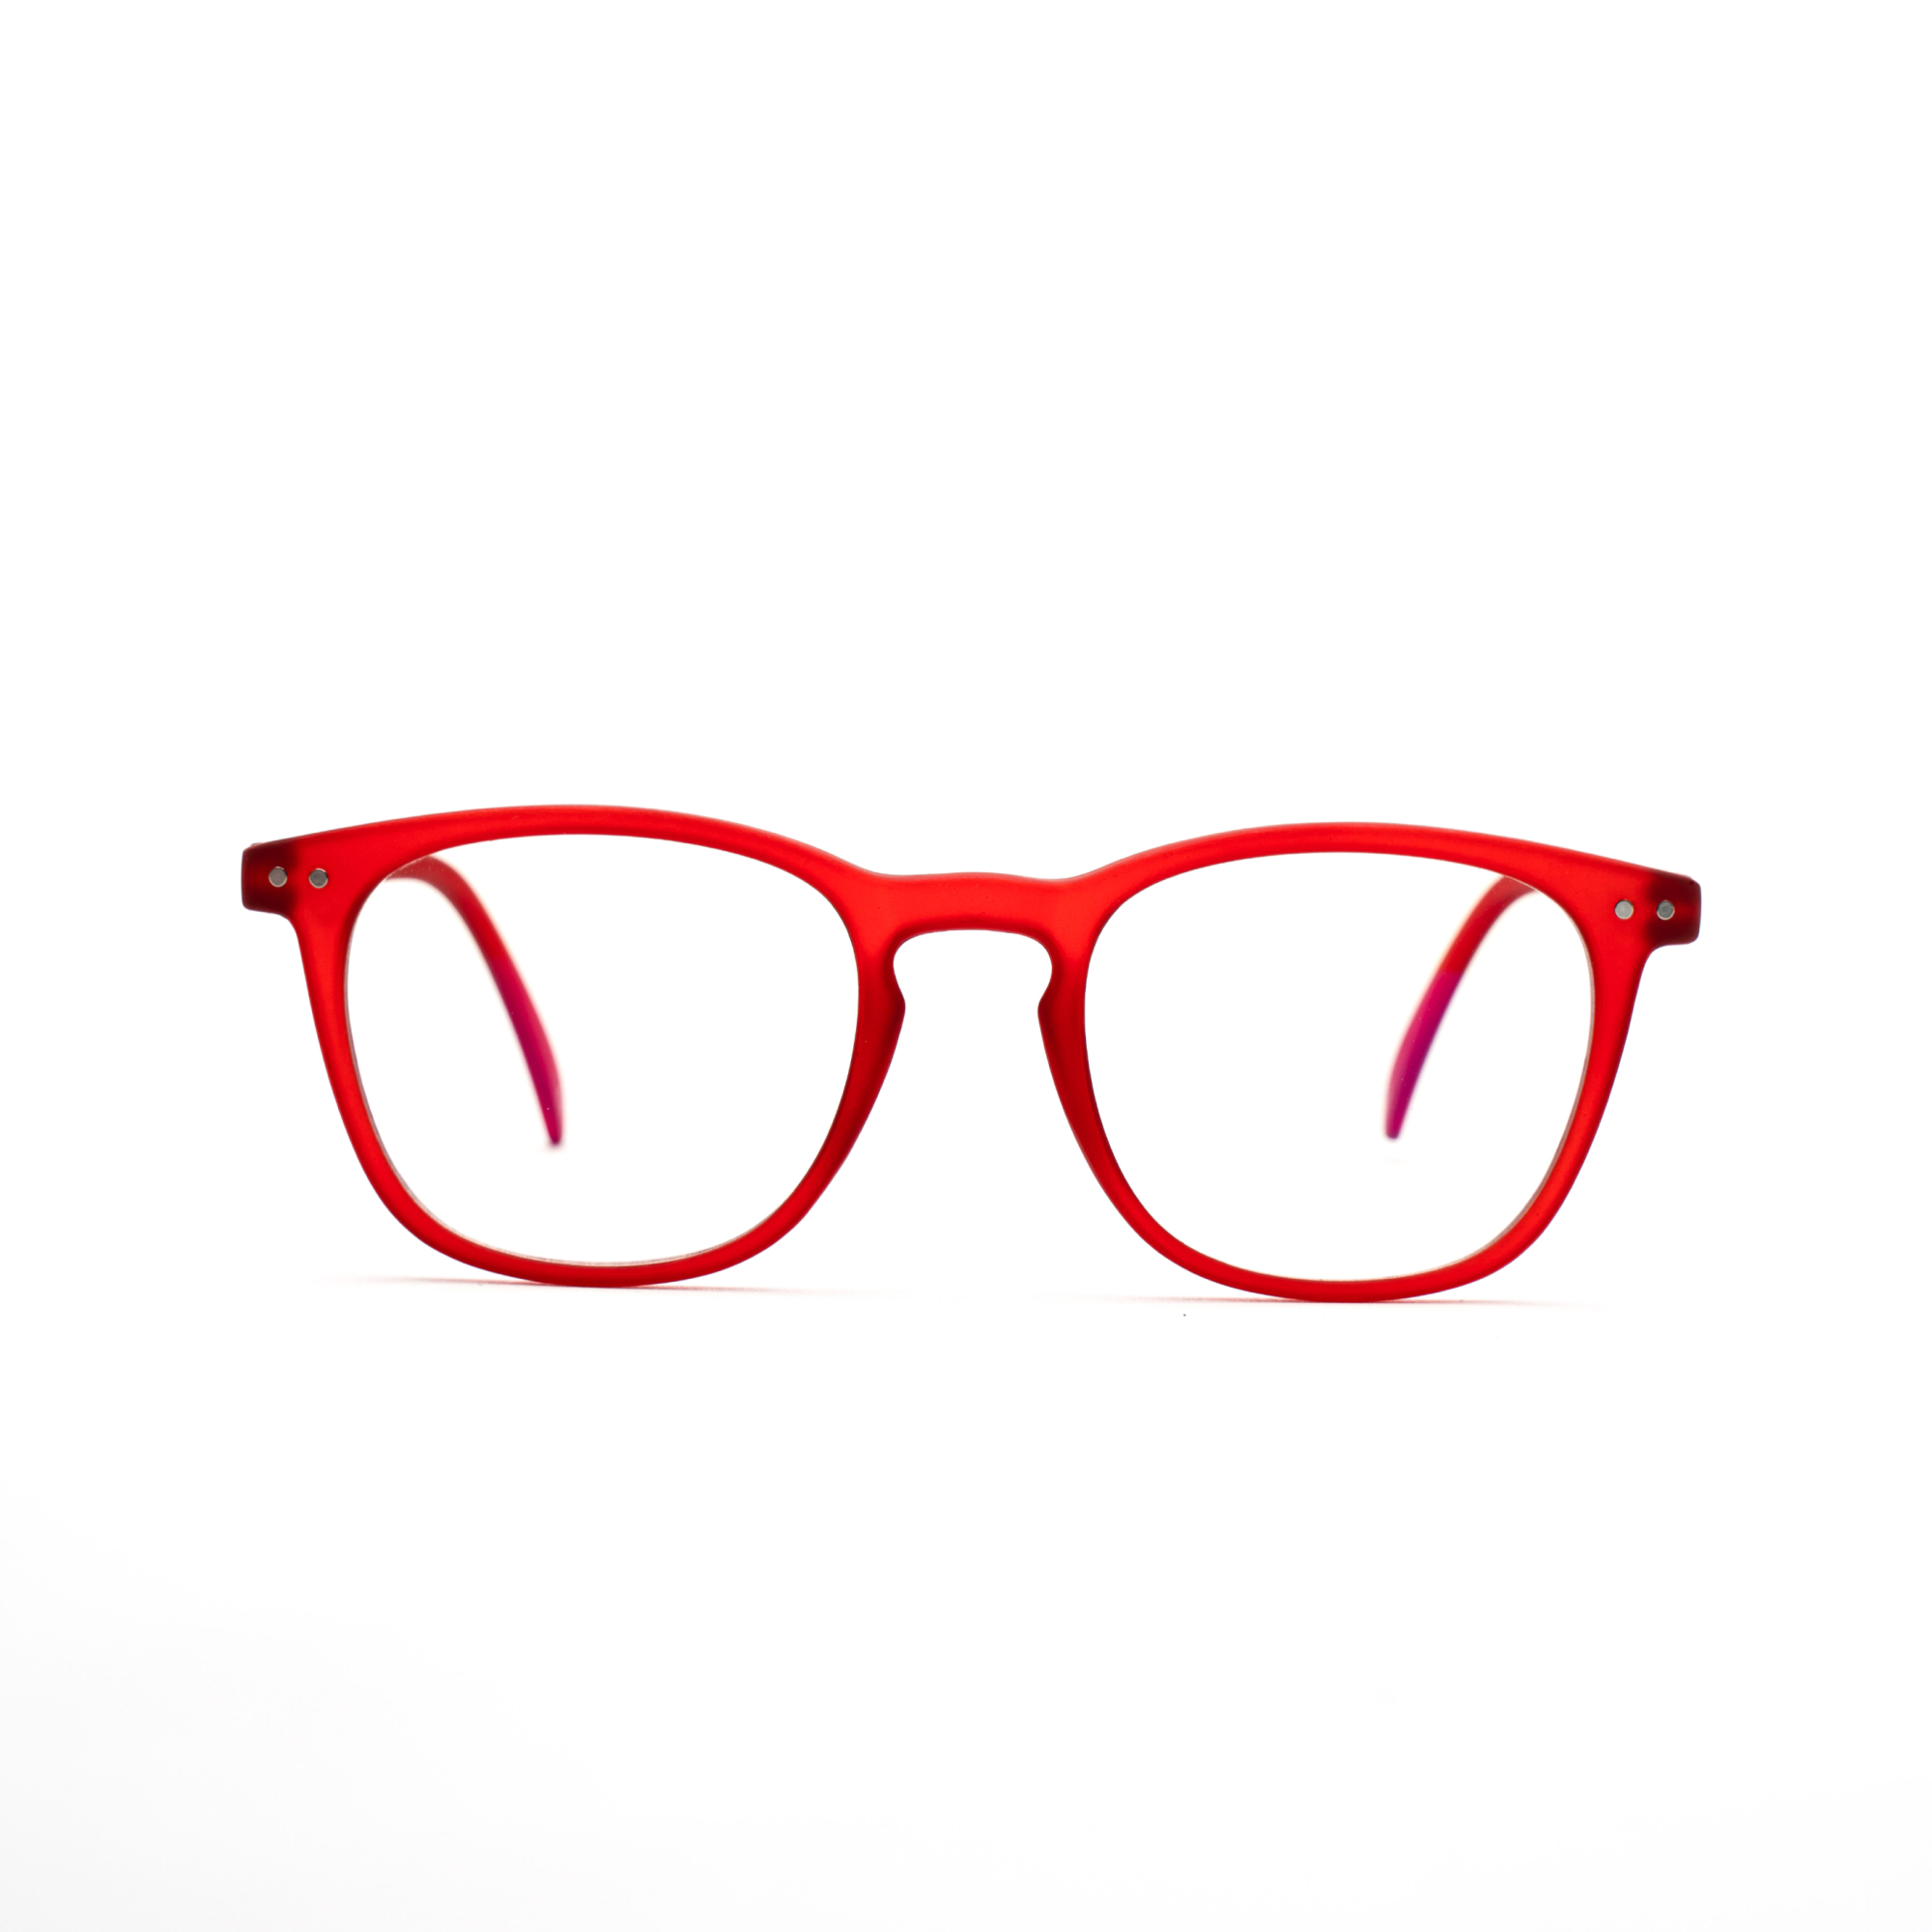 Men's blue light reading glasses – William BlueVision m - Red